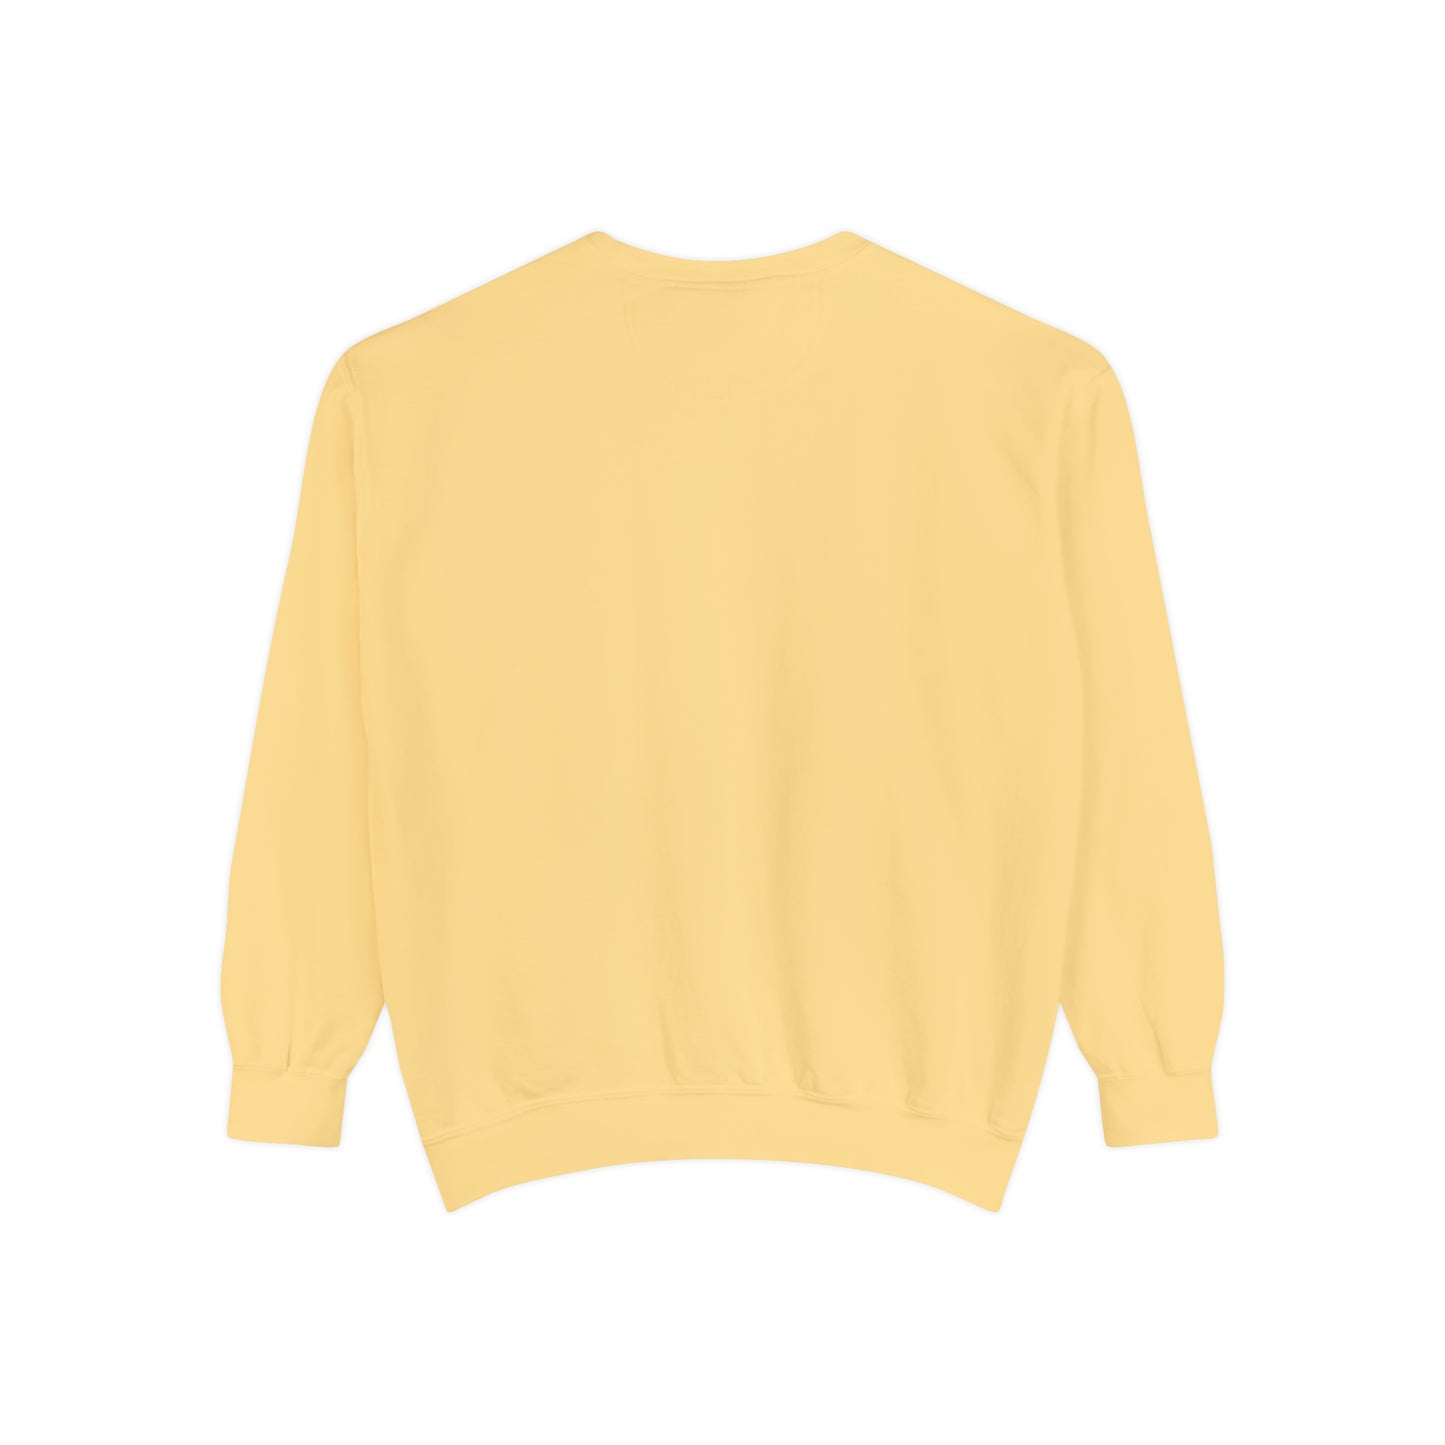 INSPIRED INSPIRE MORE Unisex Dyed Sweatshirt